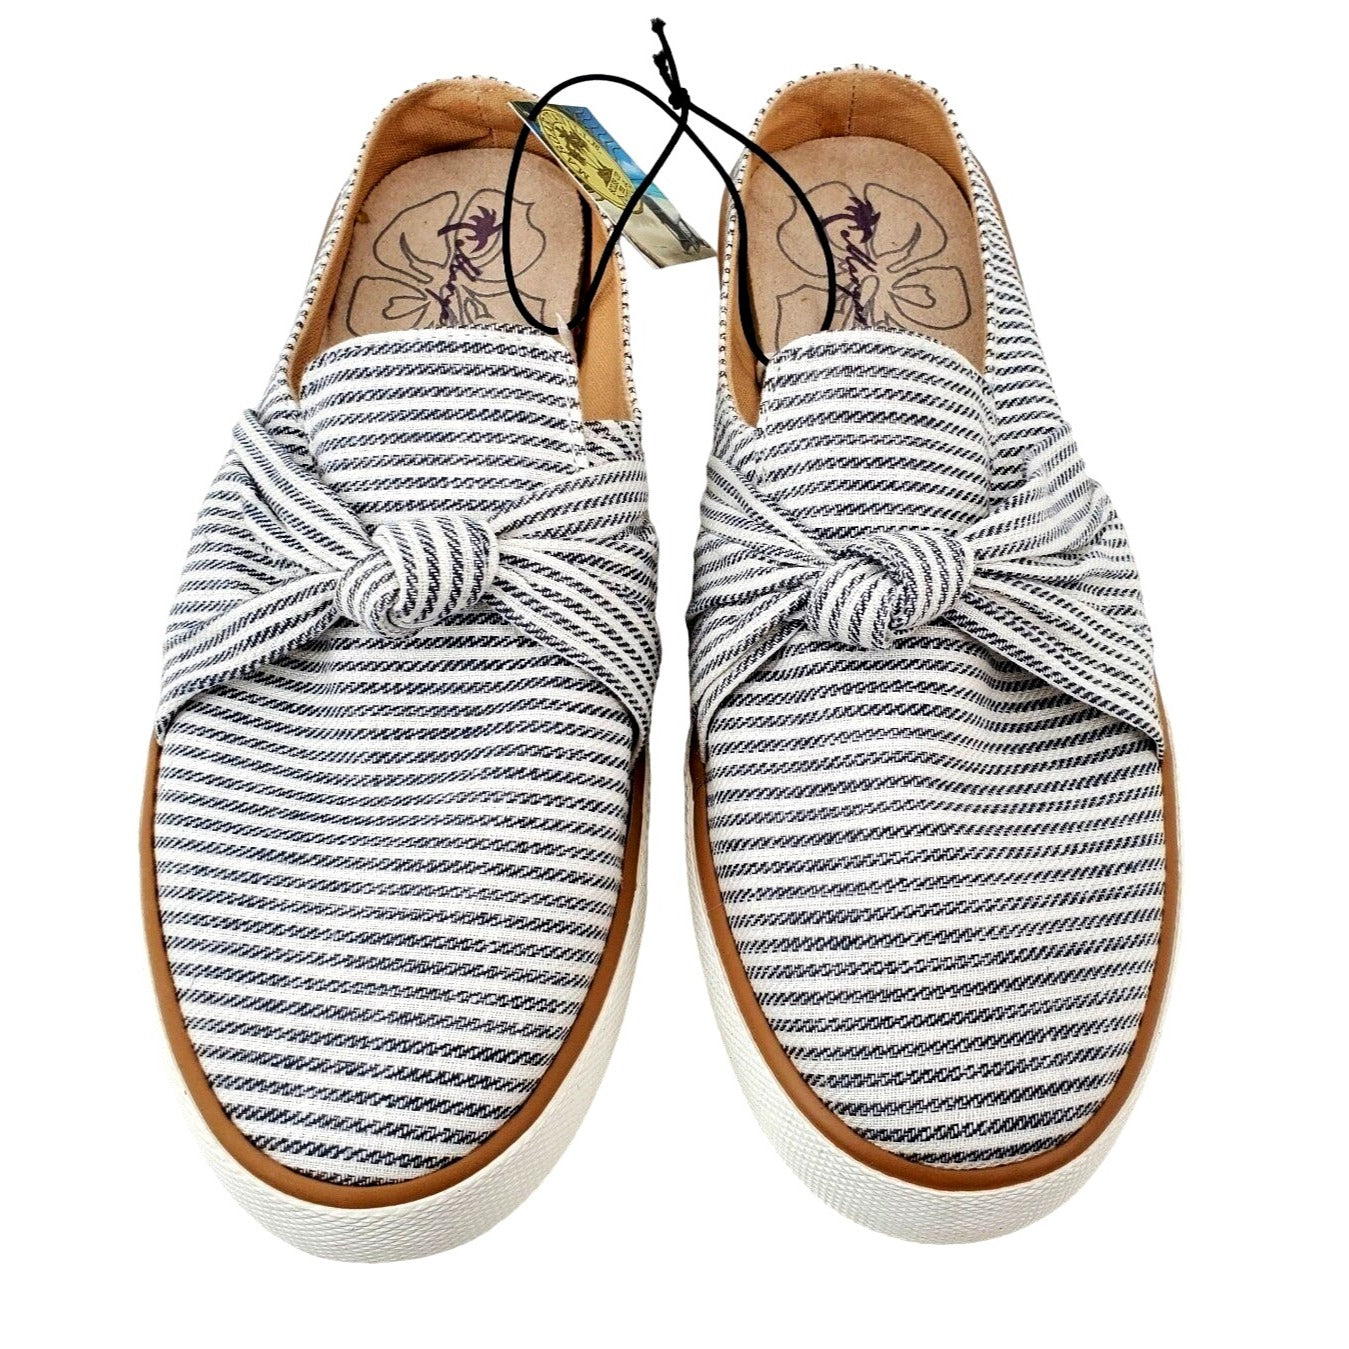 MARGARITAVILLE Mule Sneaker Woman's Slip-on Nautical Knot Sandal Shoe